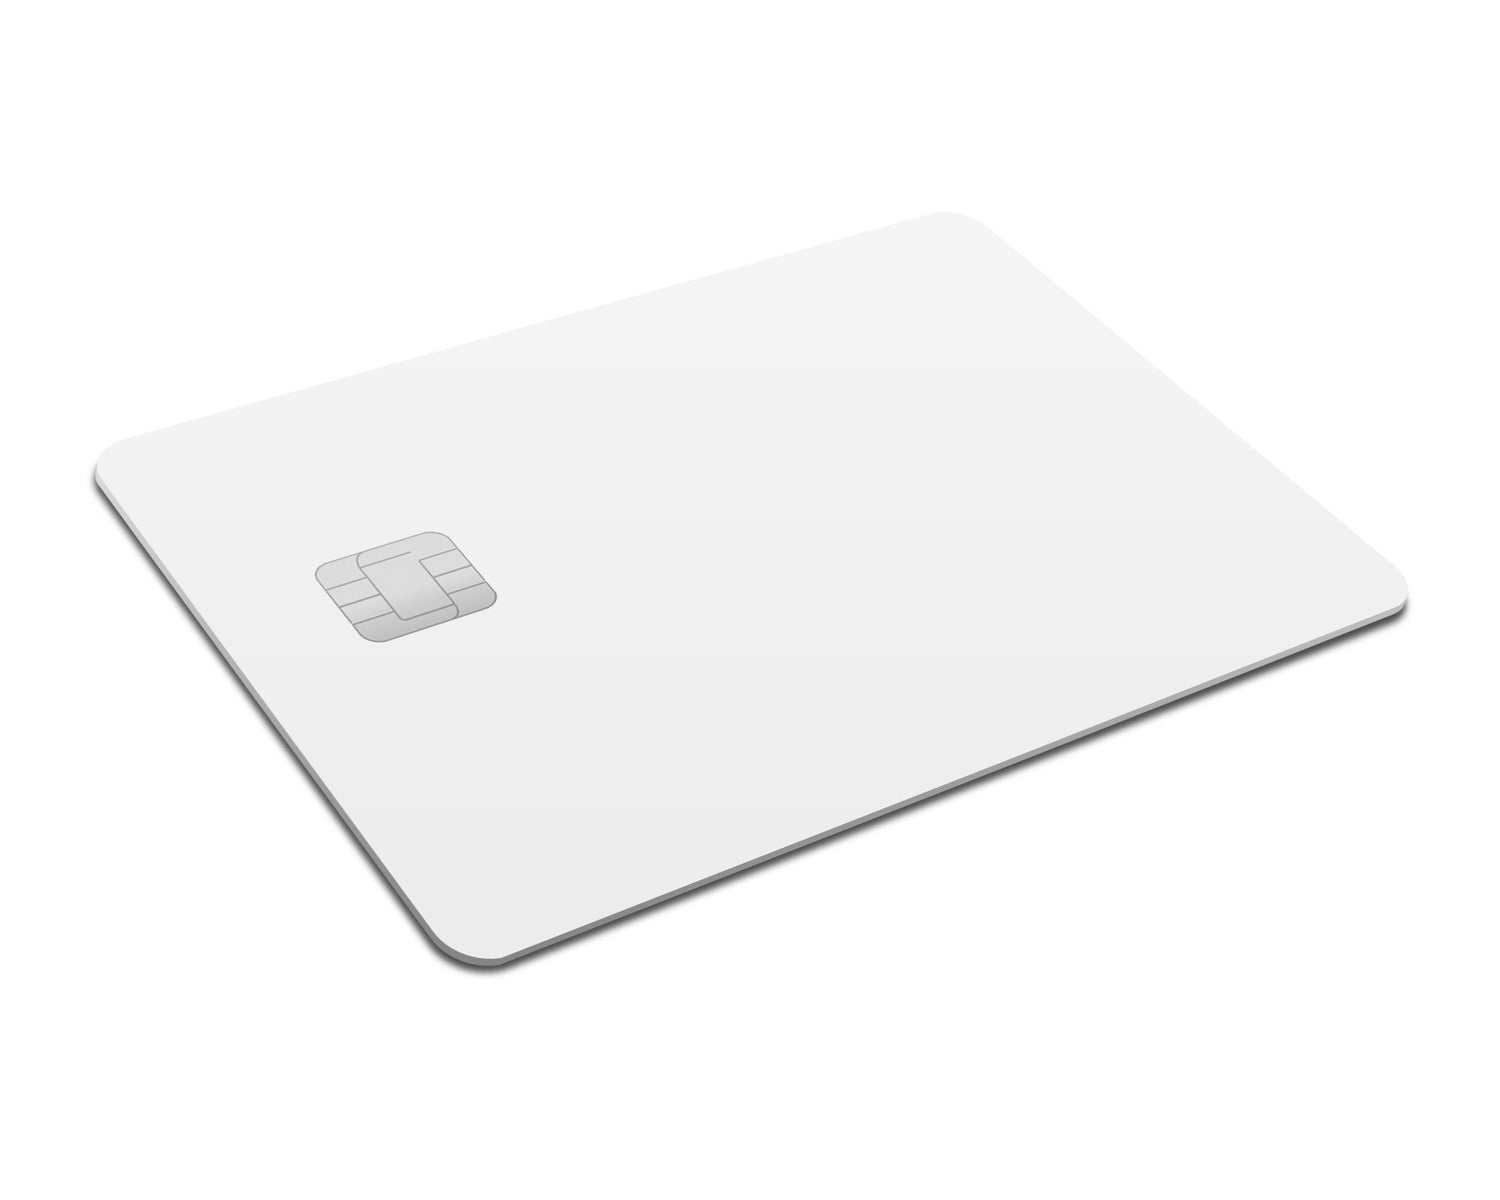 Flex Designs Credit Card Avalache White Full Skins - Pattern  & Debit Card Skin